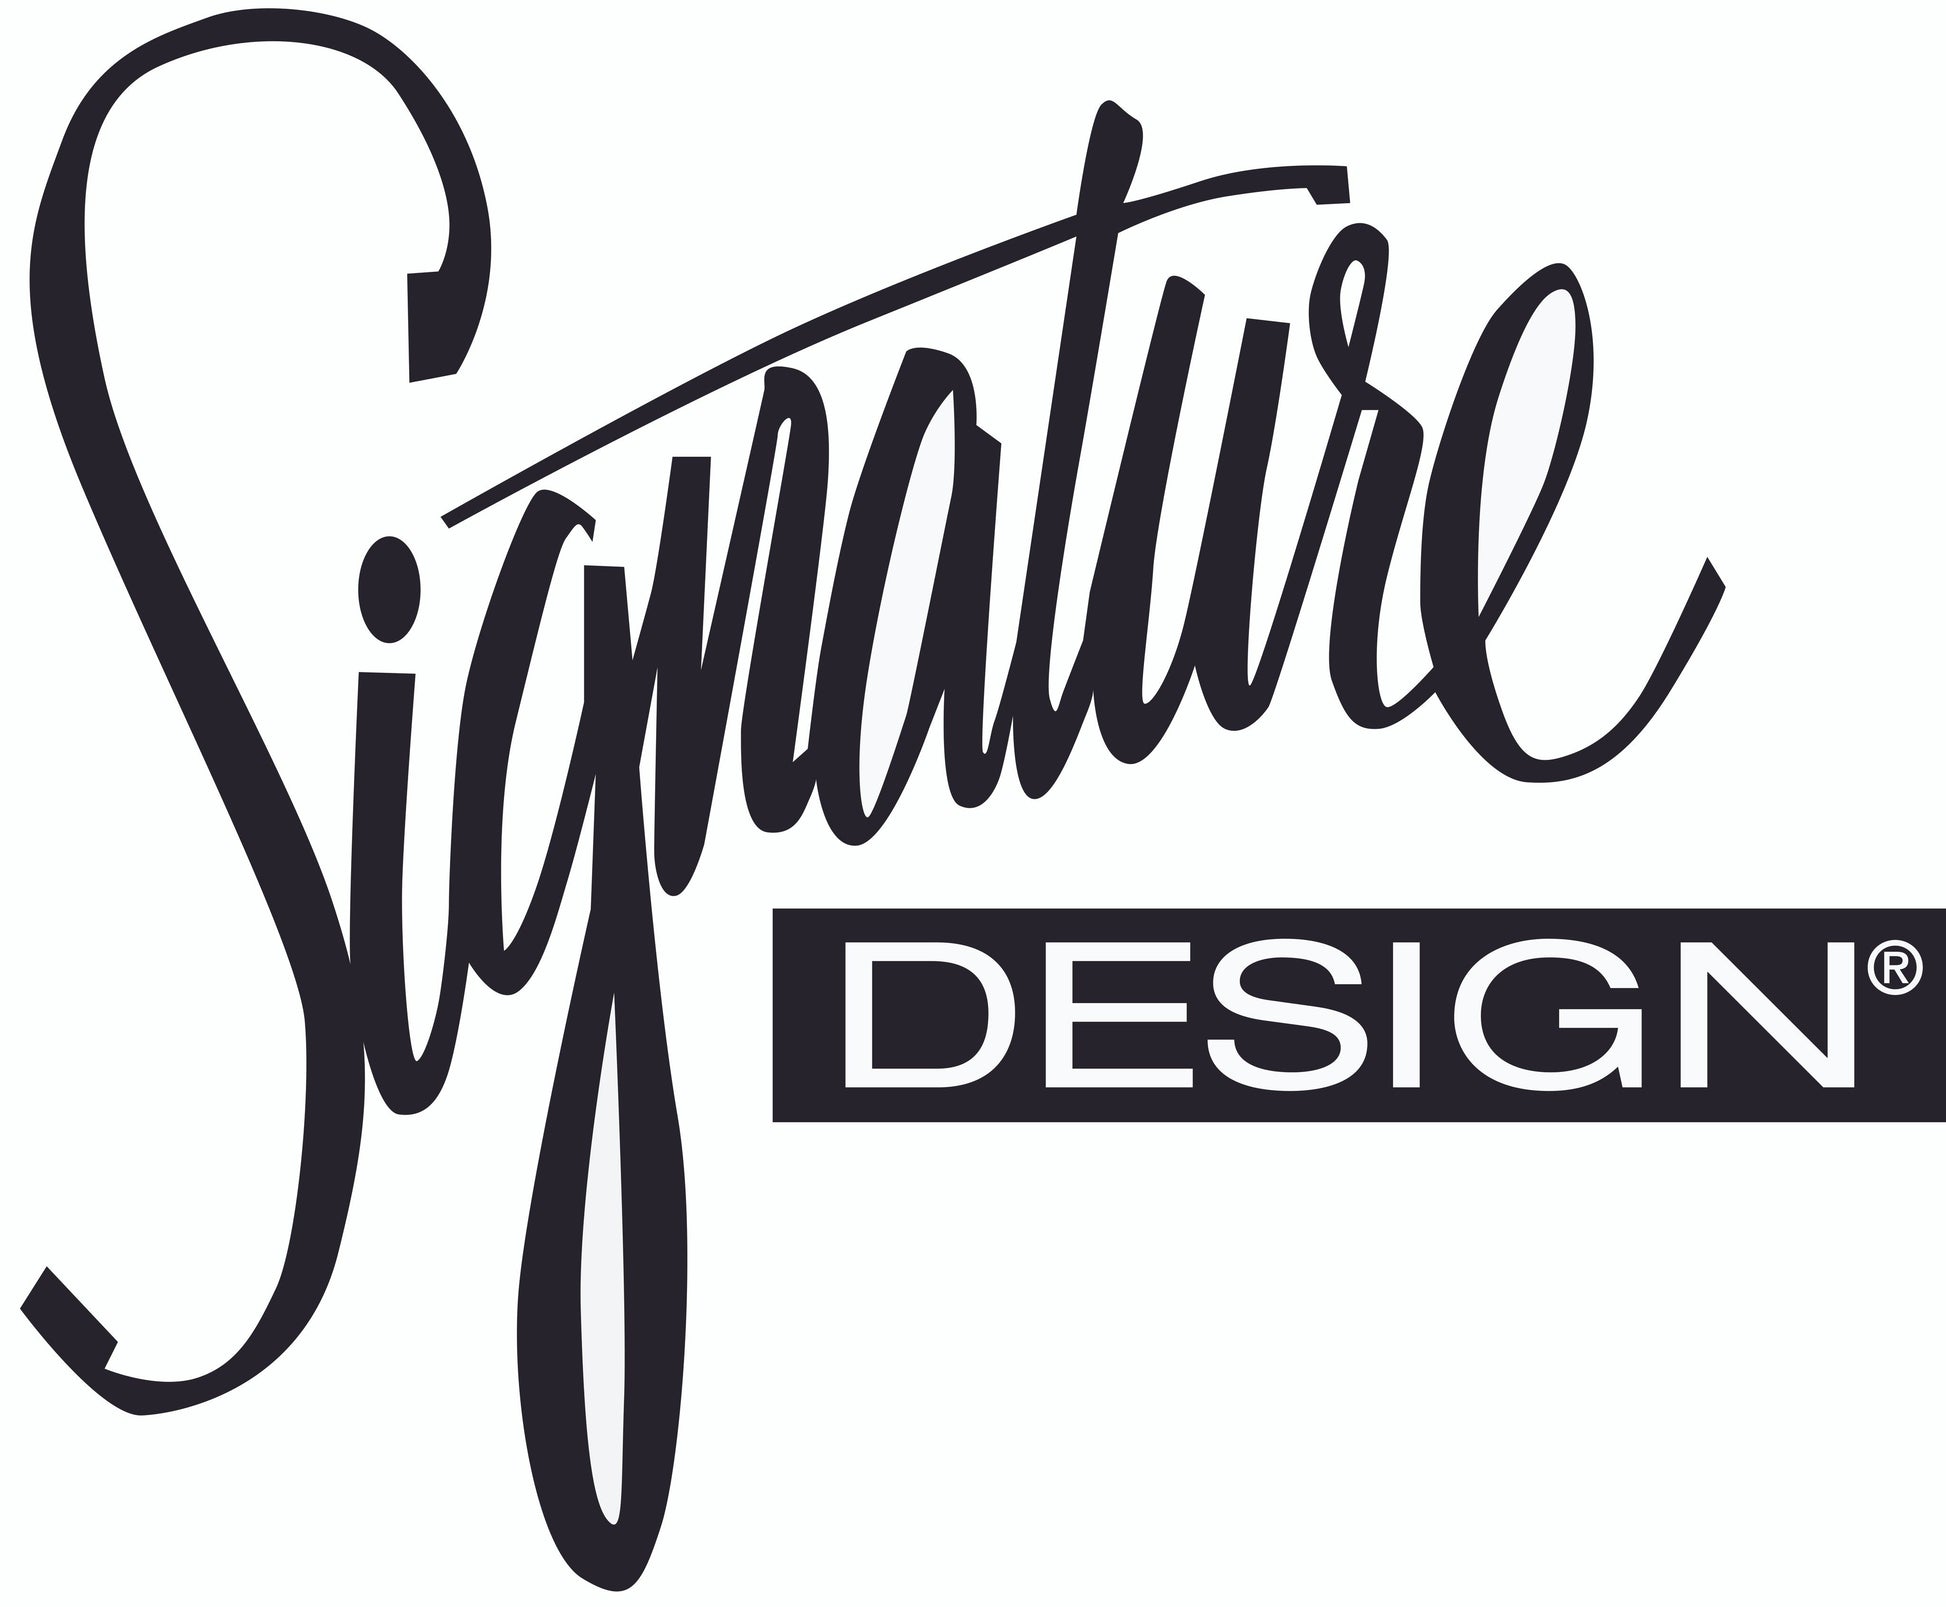 Nicorvo Queen Sofa Sleeper Signature Design by Ashley®